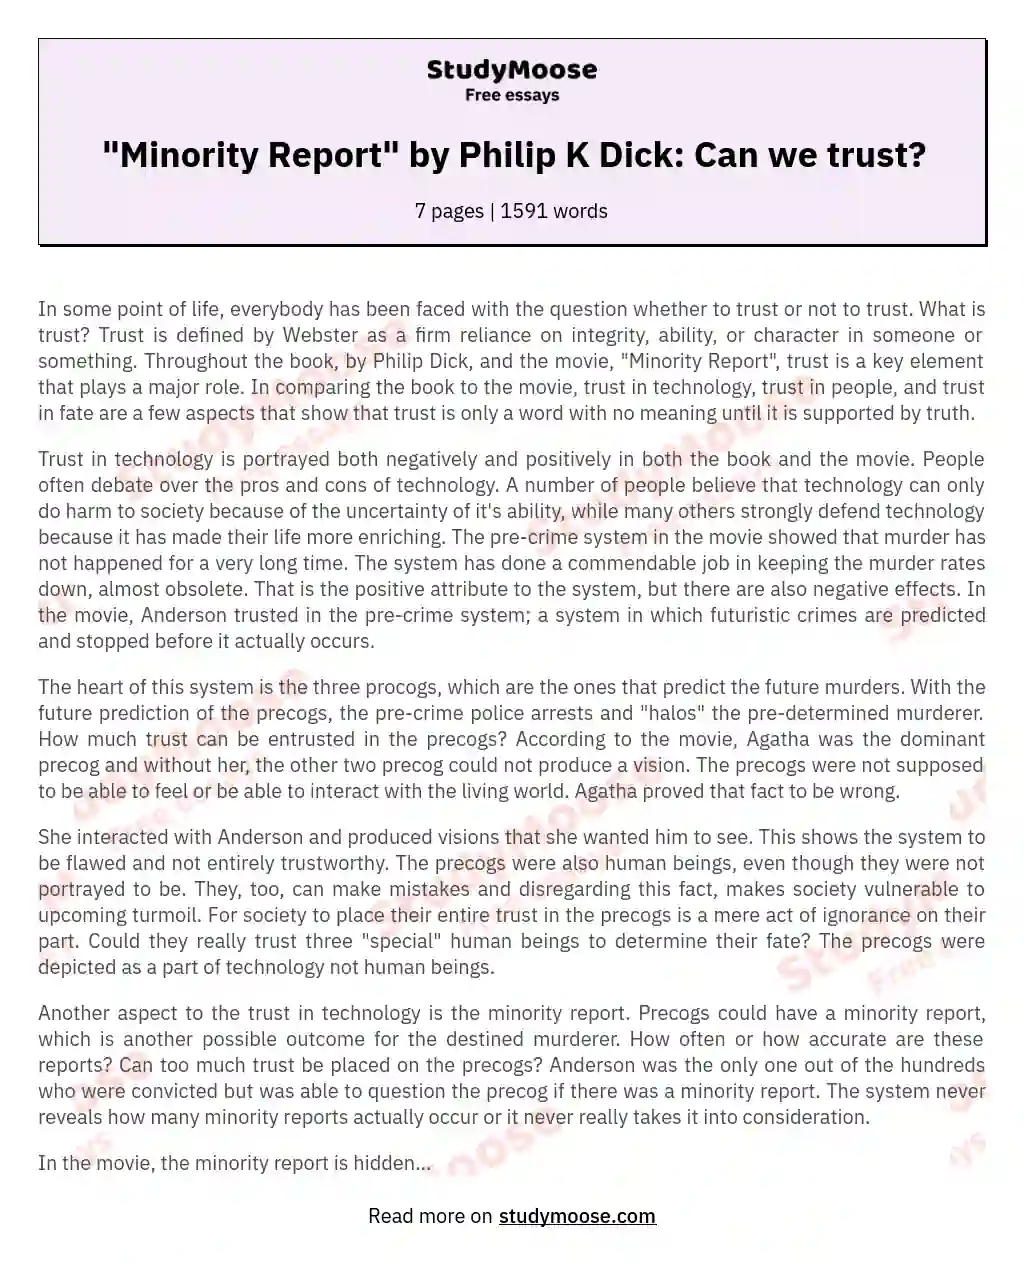 "Minority Report" by Philip K Dick: Can we trust? essay